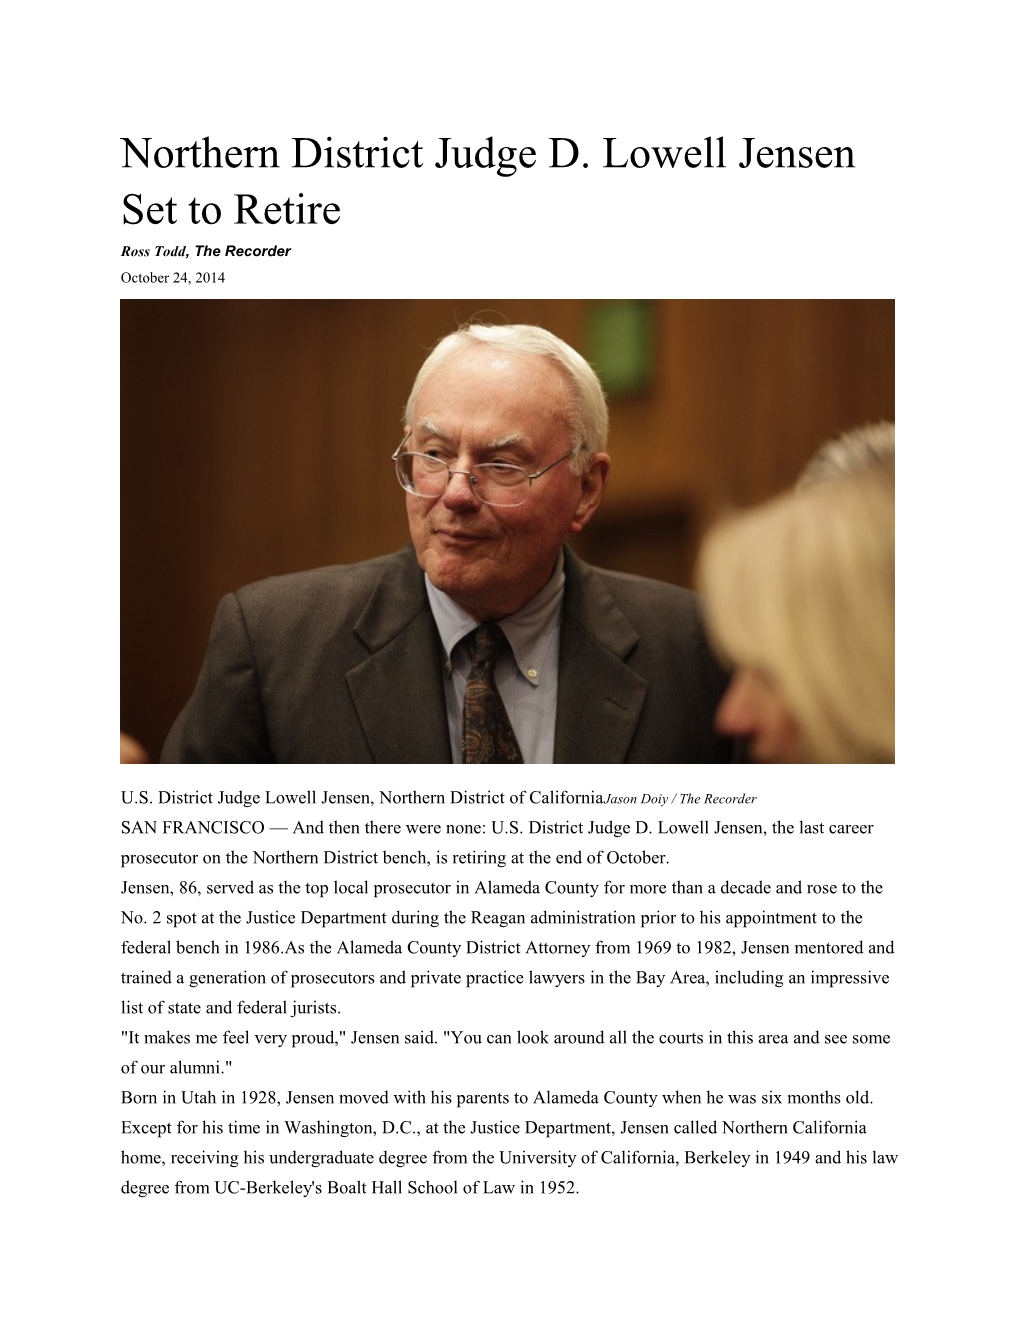 Northern District Judge D. Lowell Jensen Set to Retire